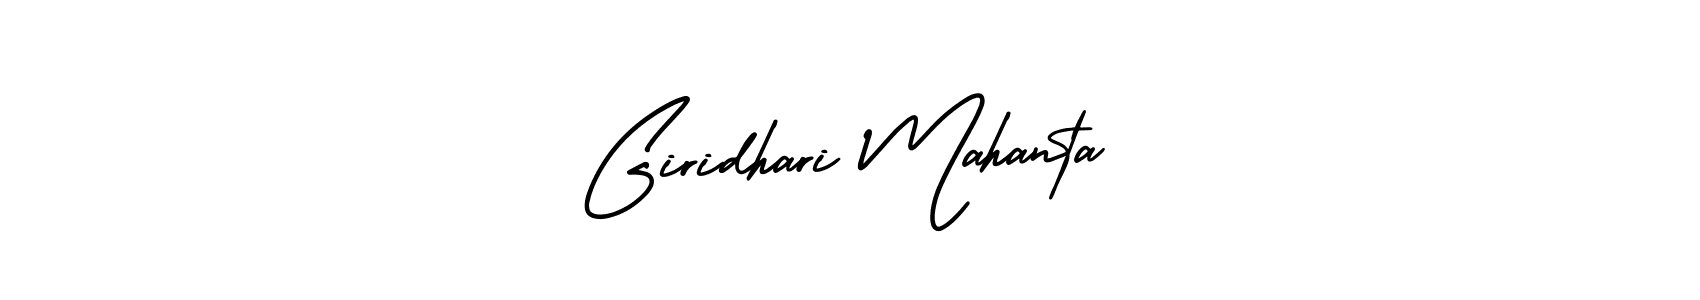 Similarly AmerikaSignatureDemo-Regular is the best handwritten signature design. Signature creator online .You can use it as an online autograph creator for name Giridhari Mahanta. Giridhari Mahanta signature style 3 images and pictures png